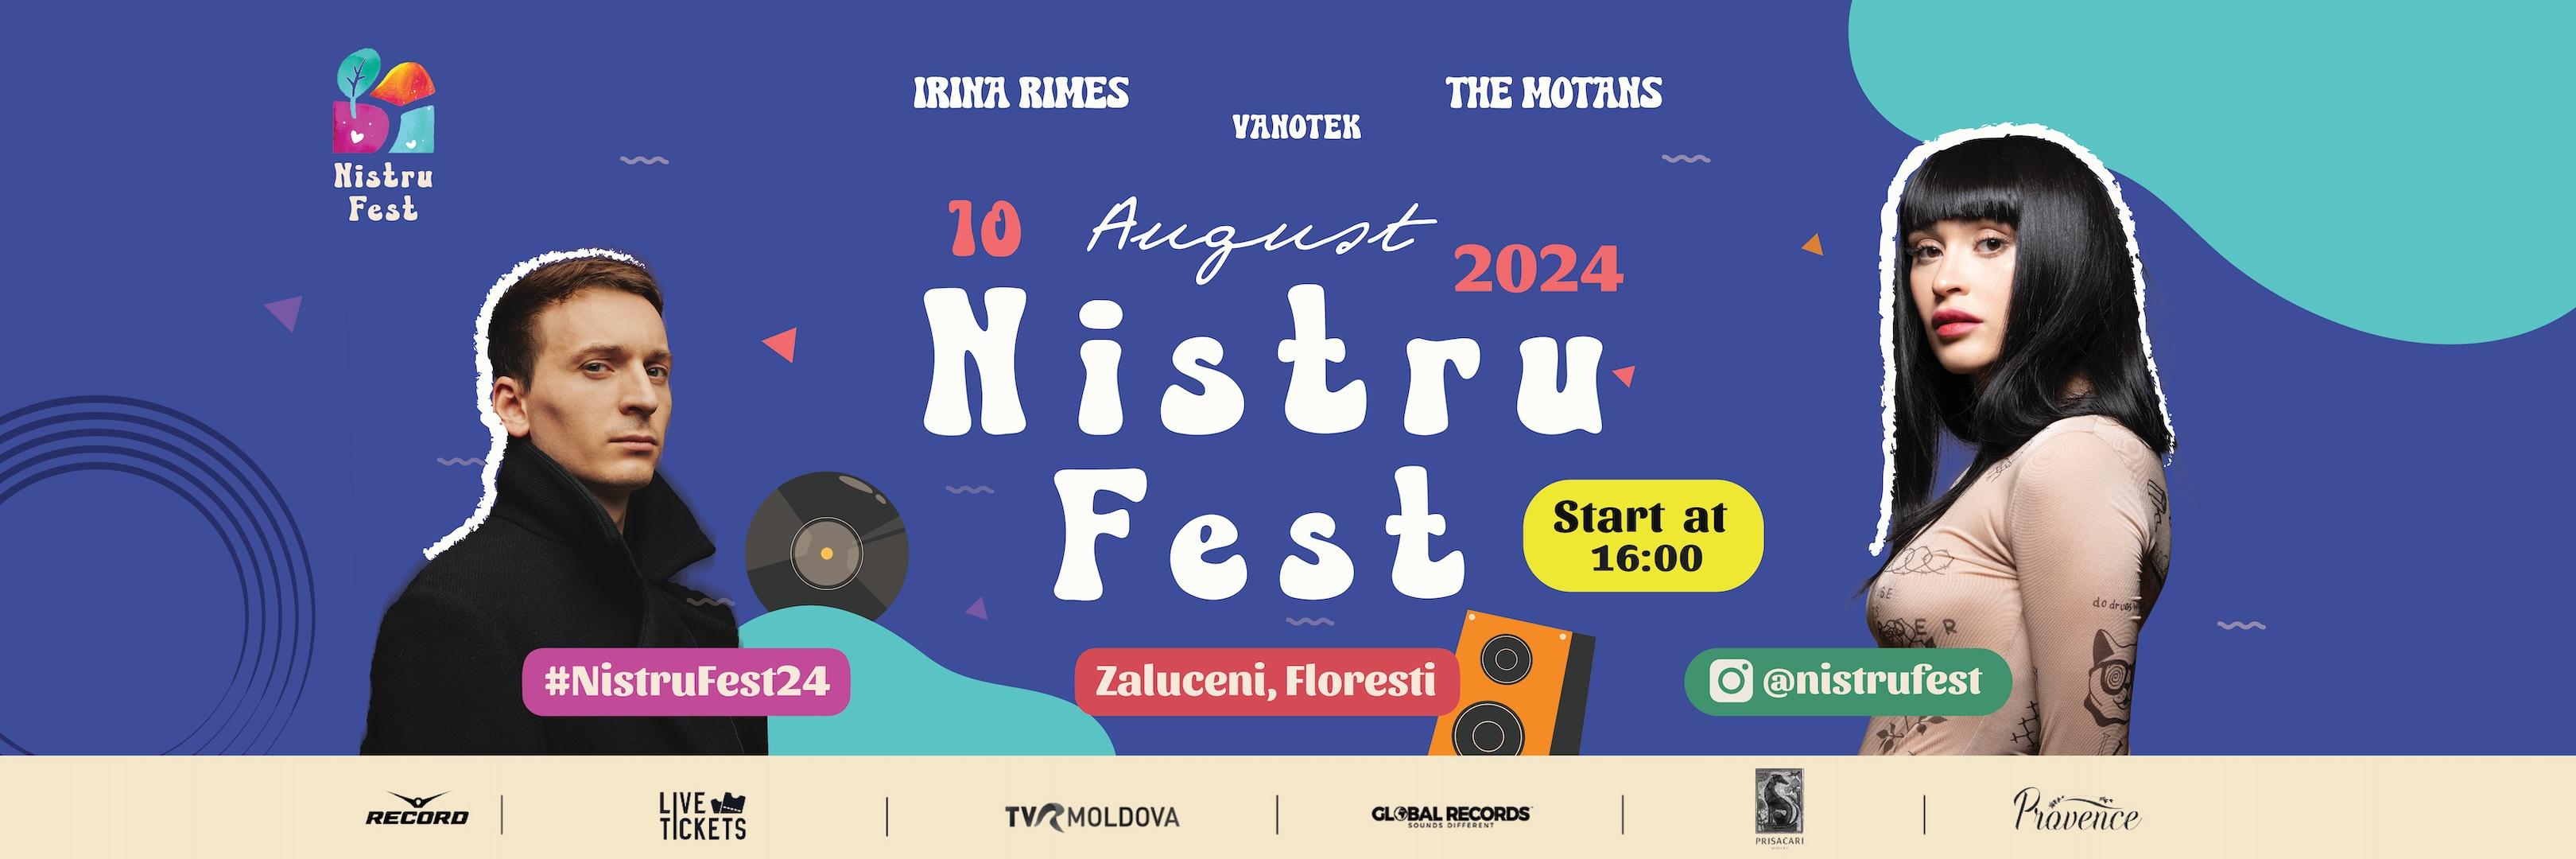 Nistru Fest’24